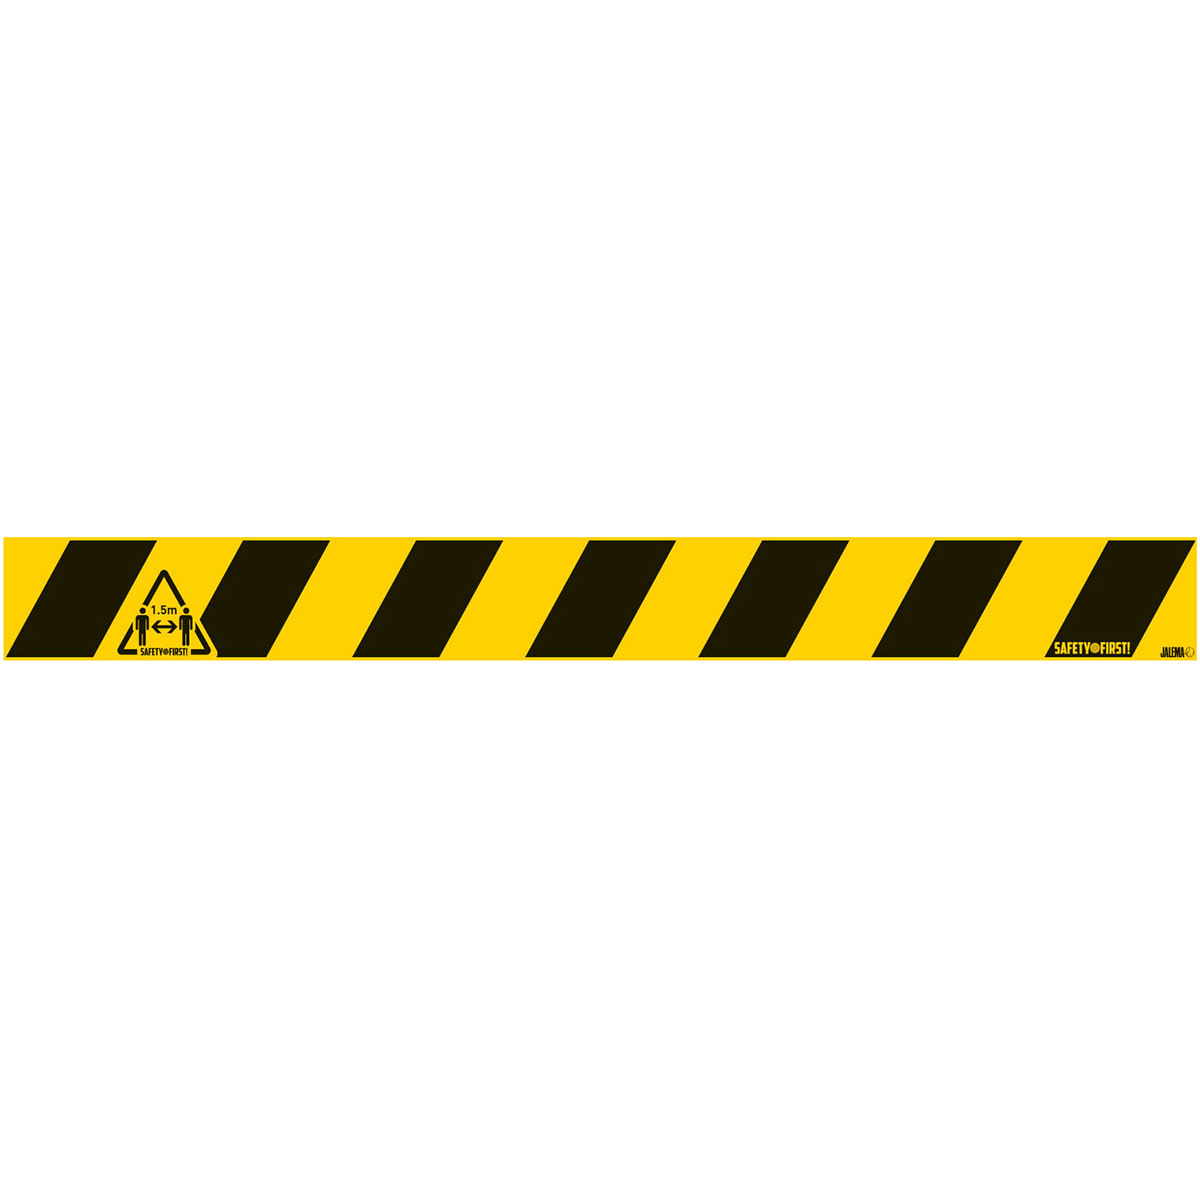 33M Social Distancing Floor Yellow Tape Hazard Keep A Safe Distance of 2 Metres 